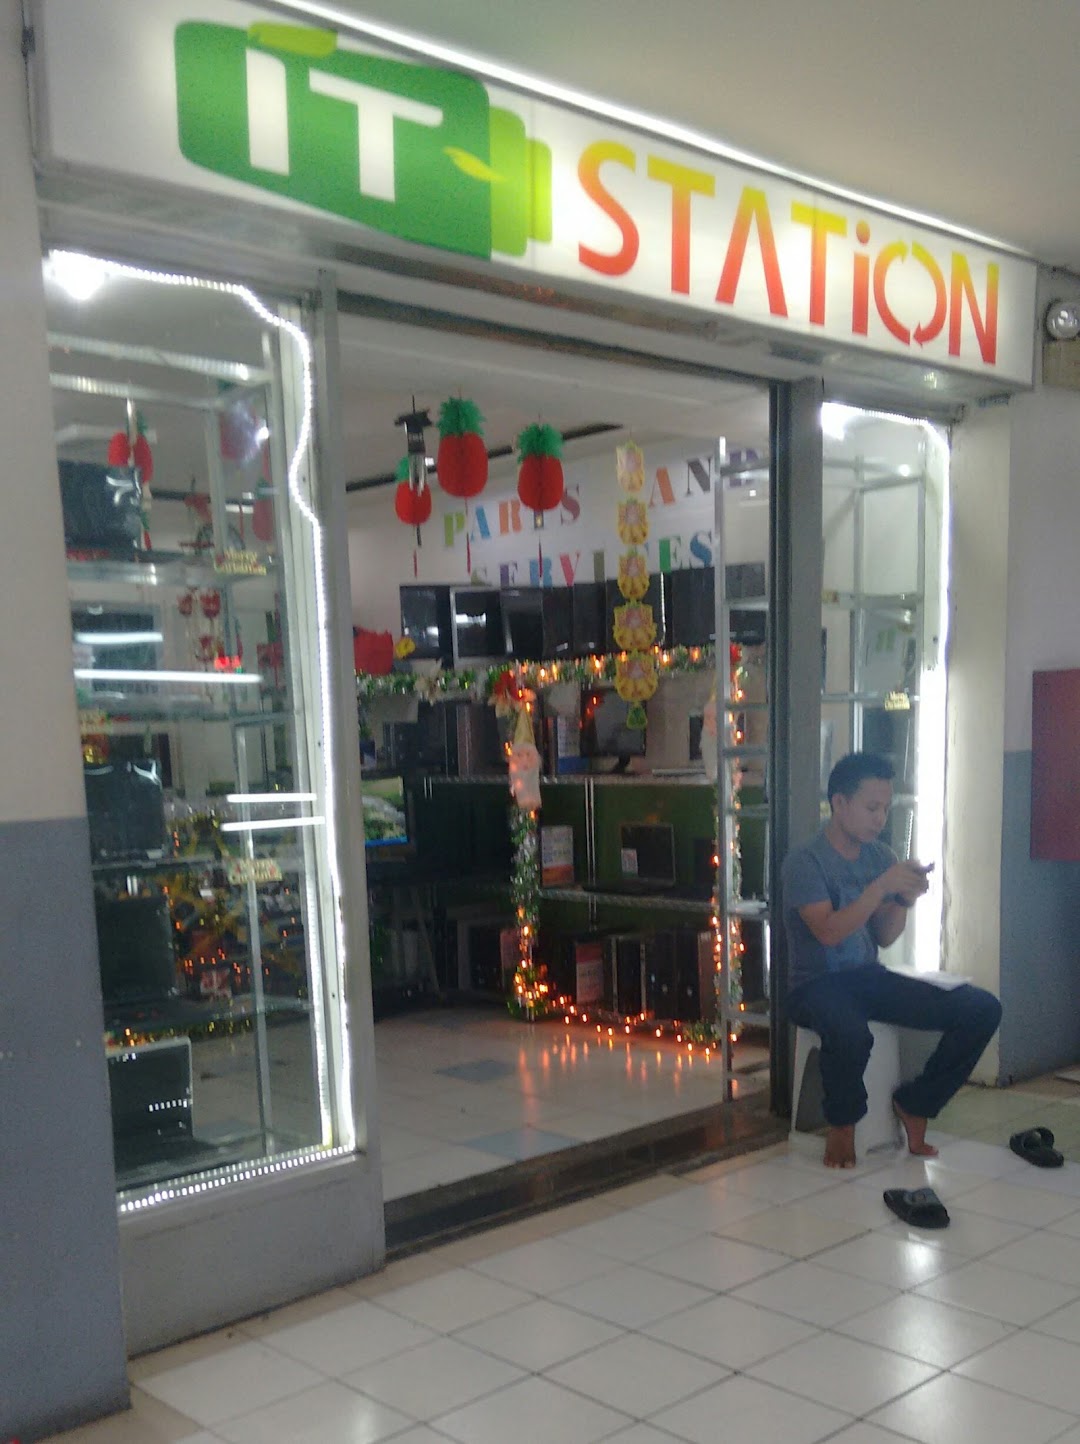 IT Station